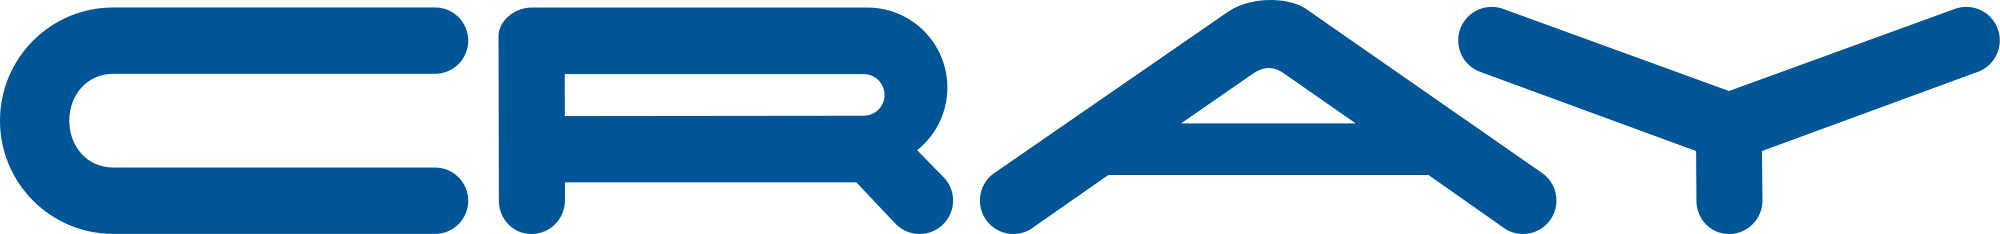 cray logo.png